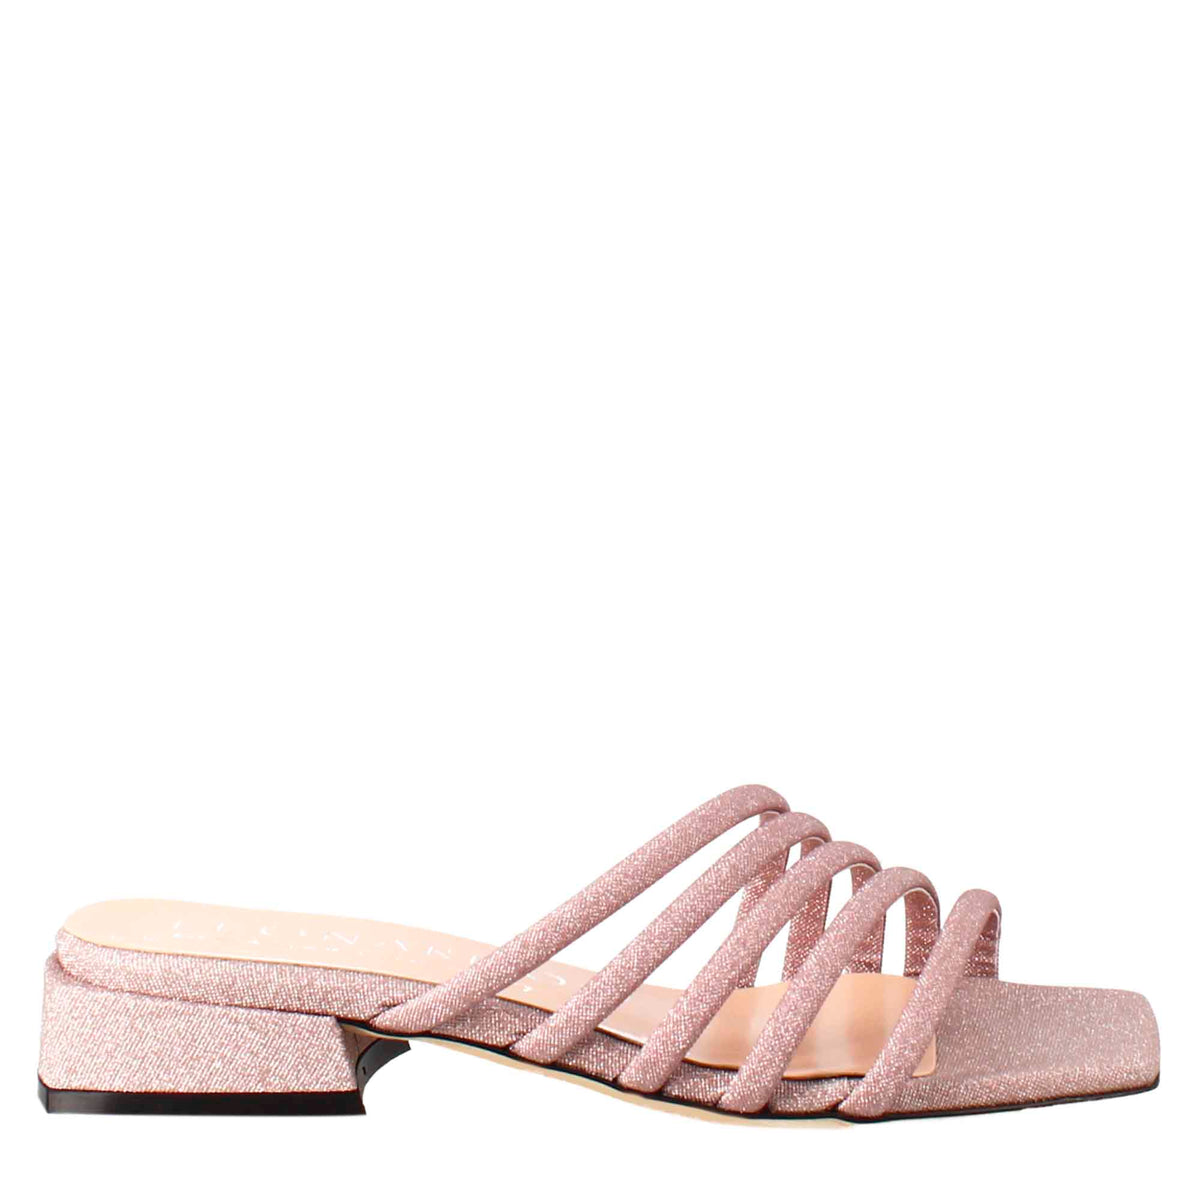 Quadratische Sandale aus rosa Leder mit Glitzer